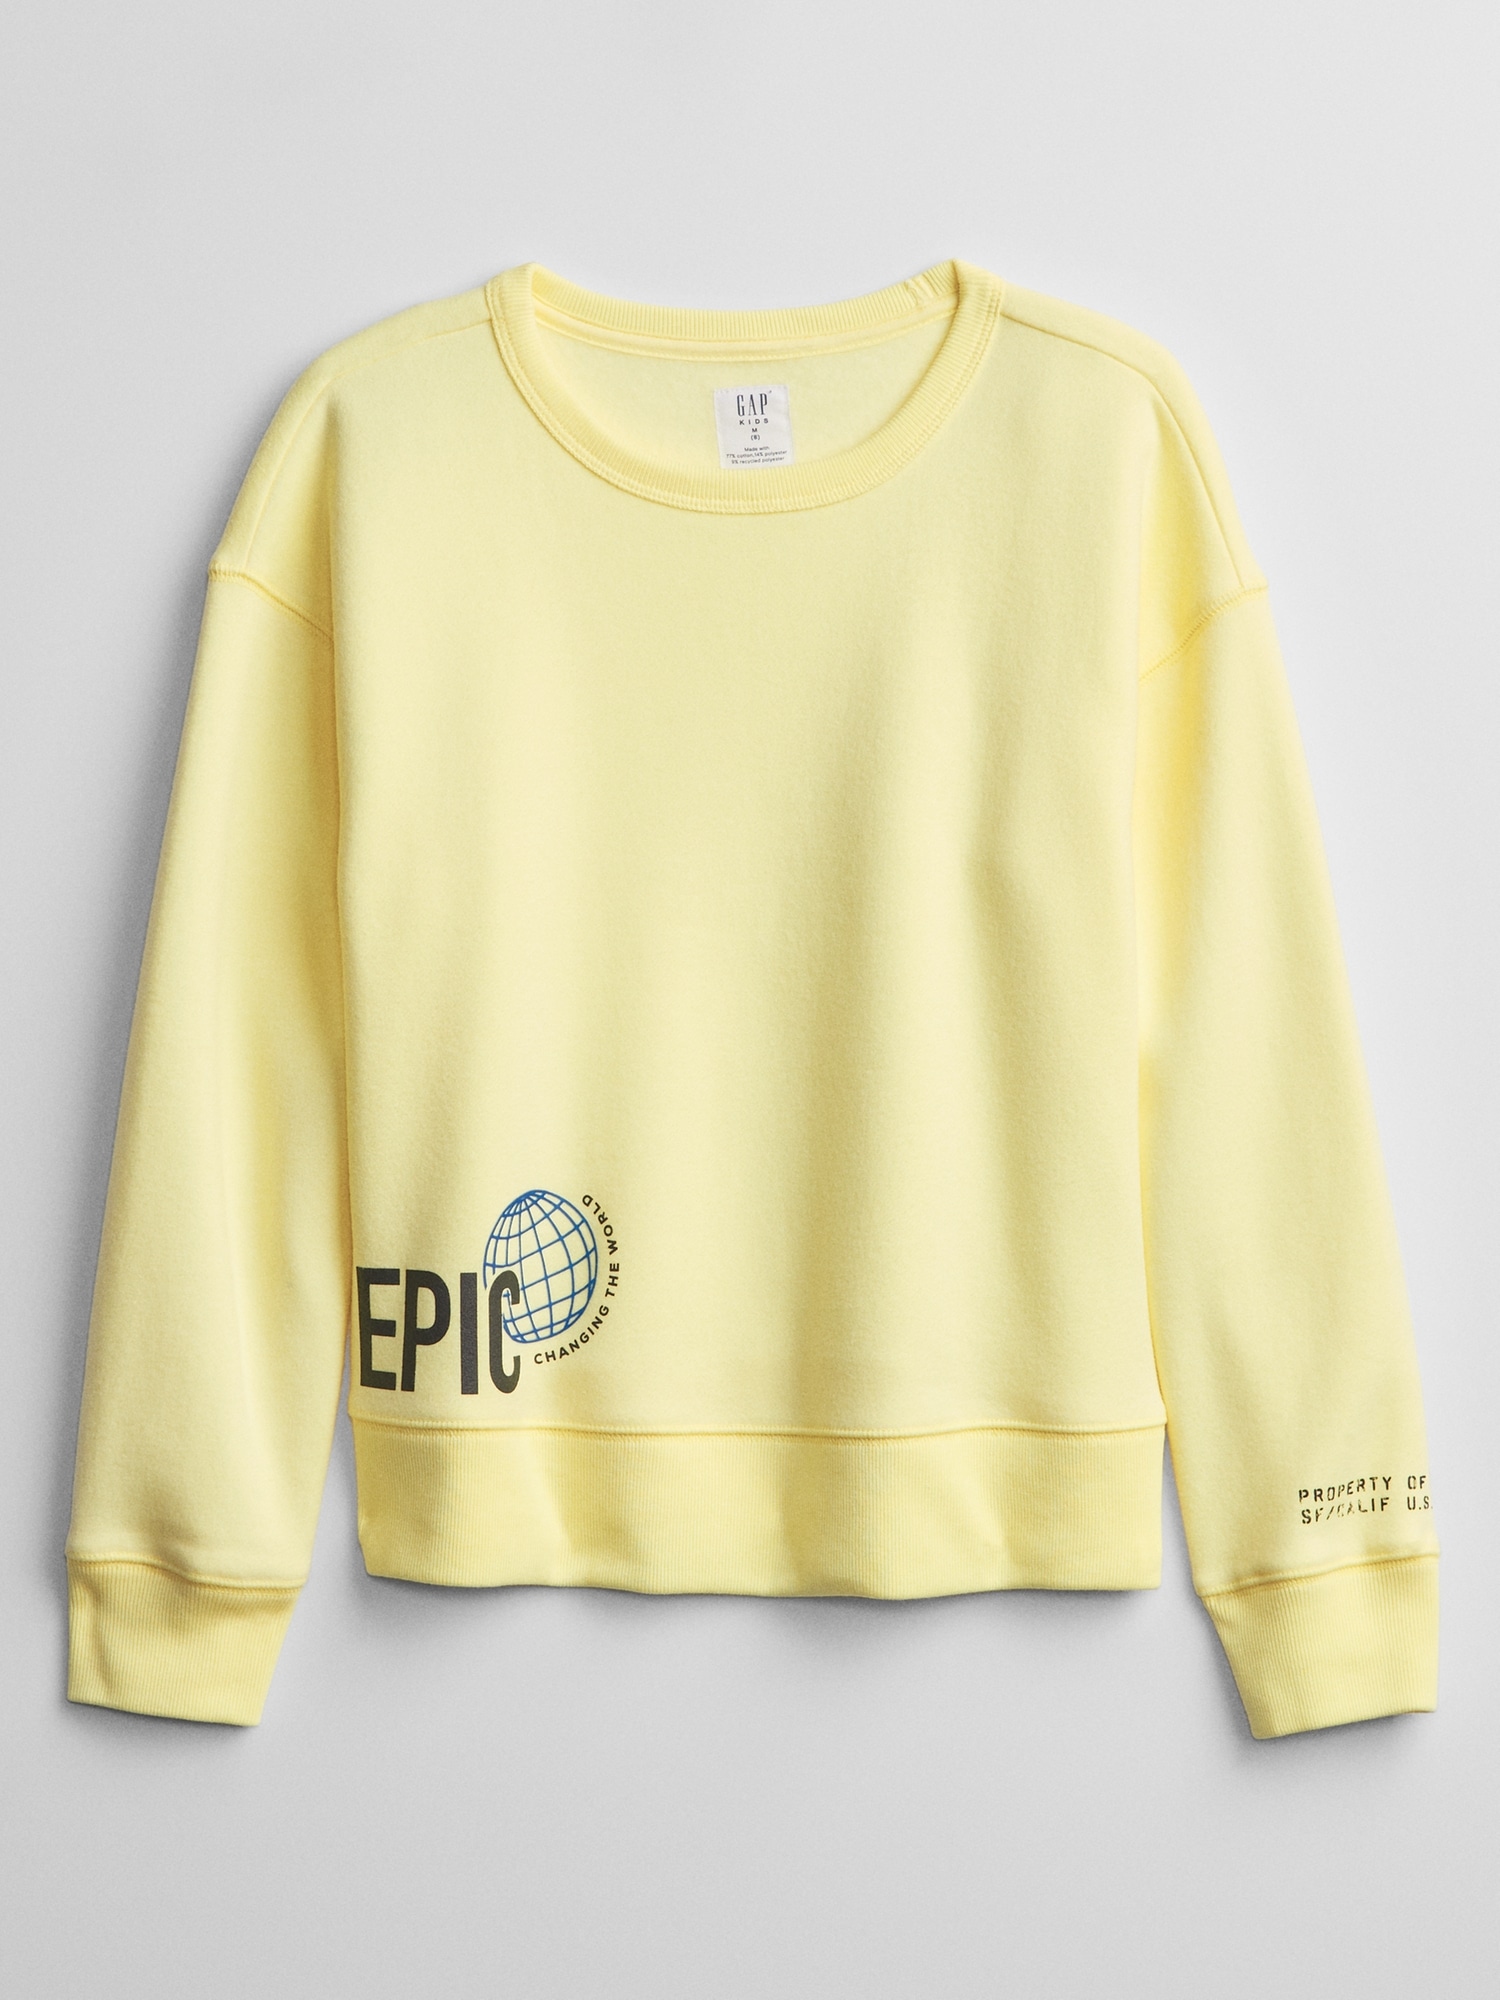 Kids Graphic Crewneck Sweatshirt | Gap Factory